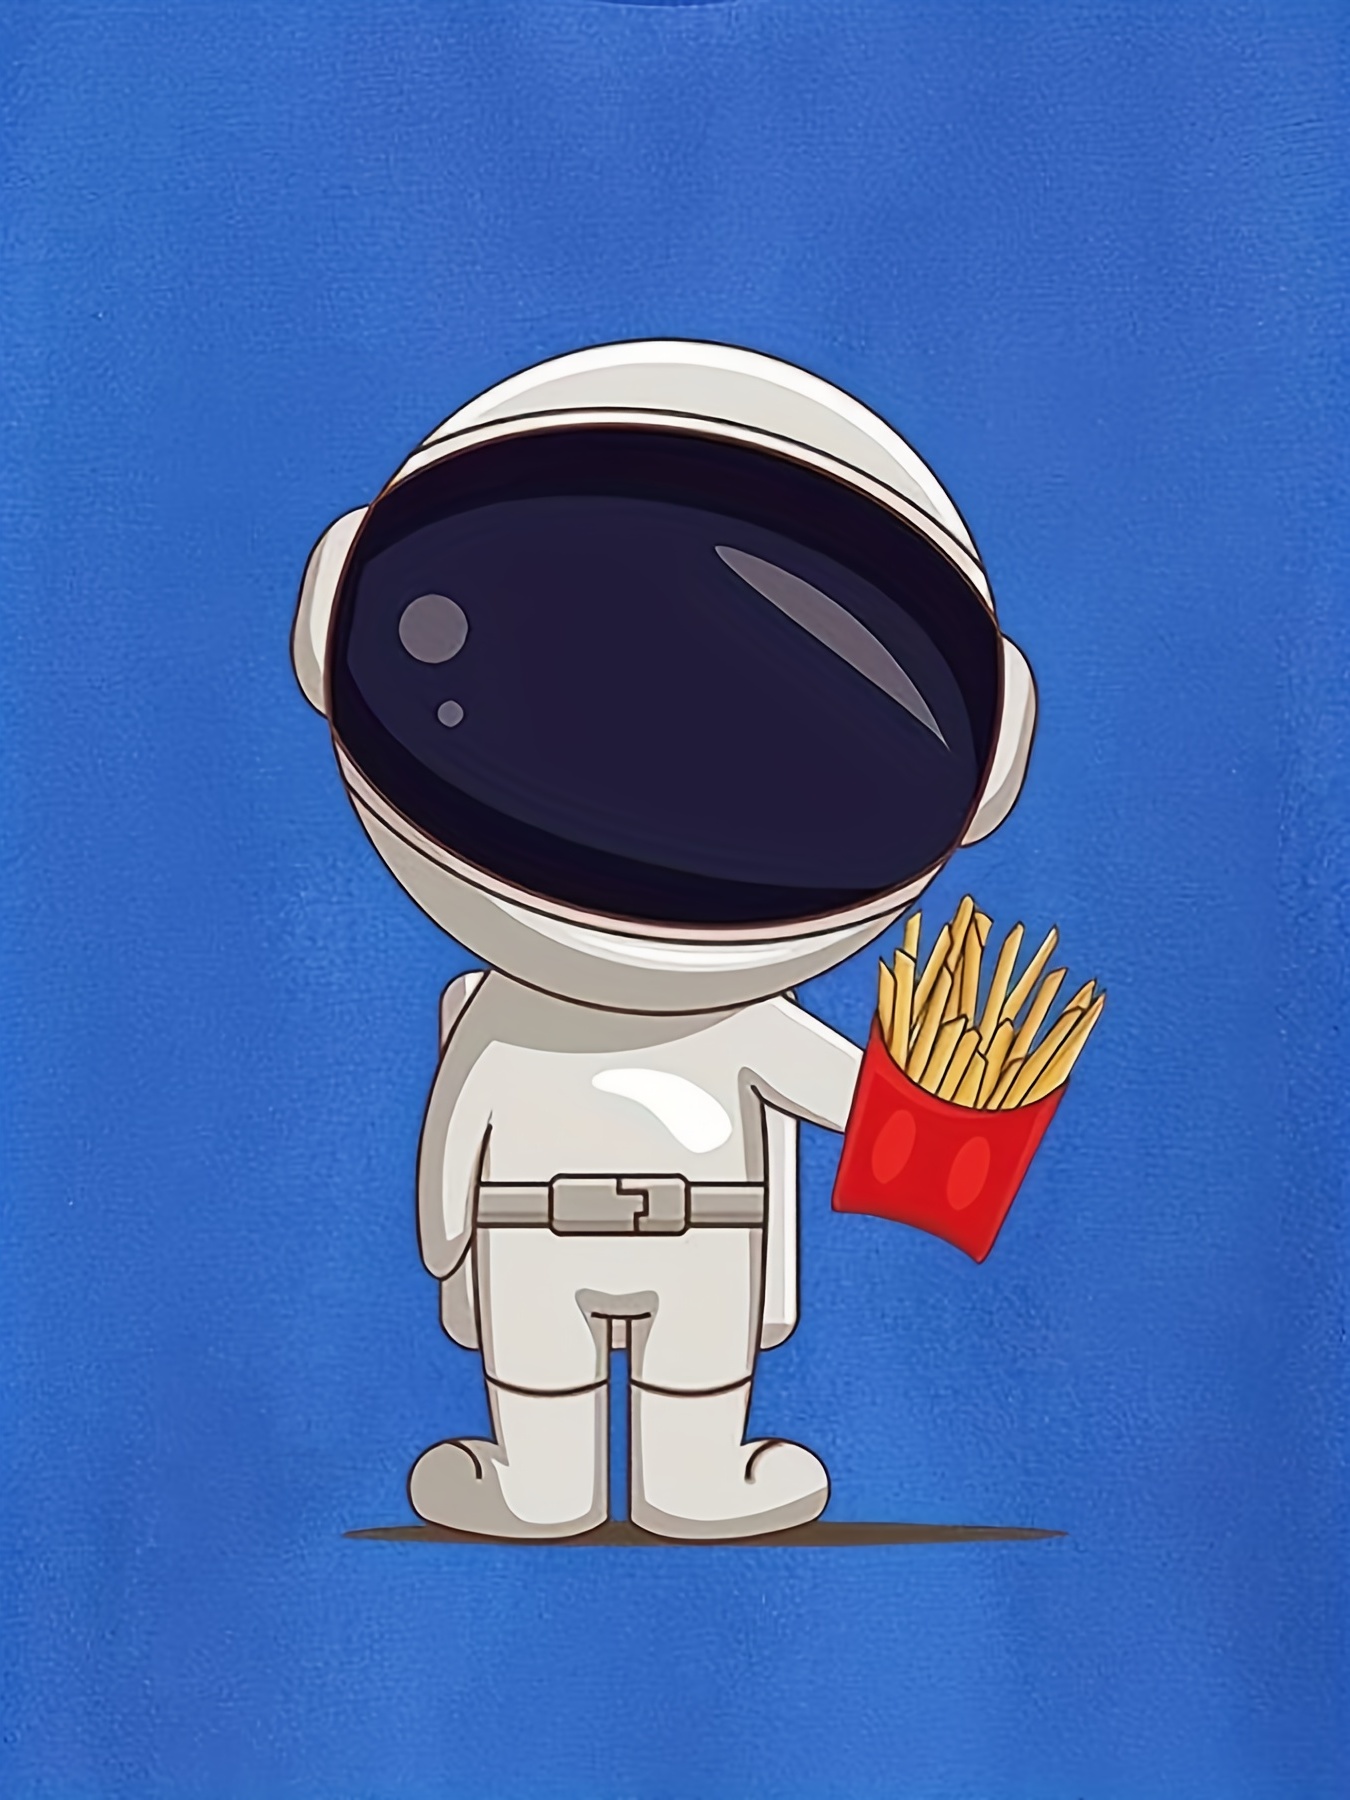 Cartoon Spaceman And Fries Print Boys Creative T-shirt, Casual